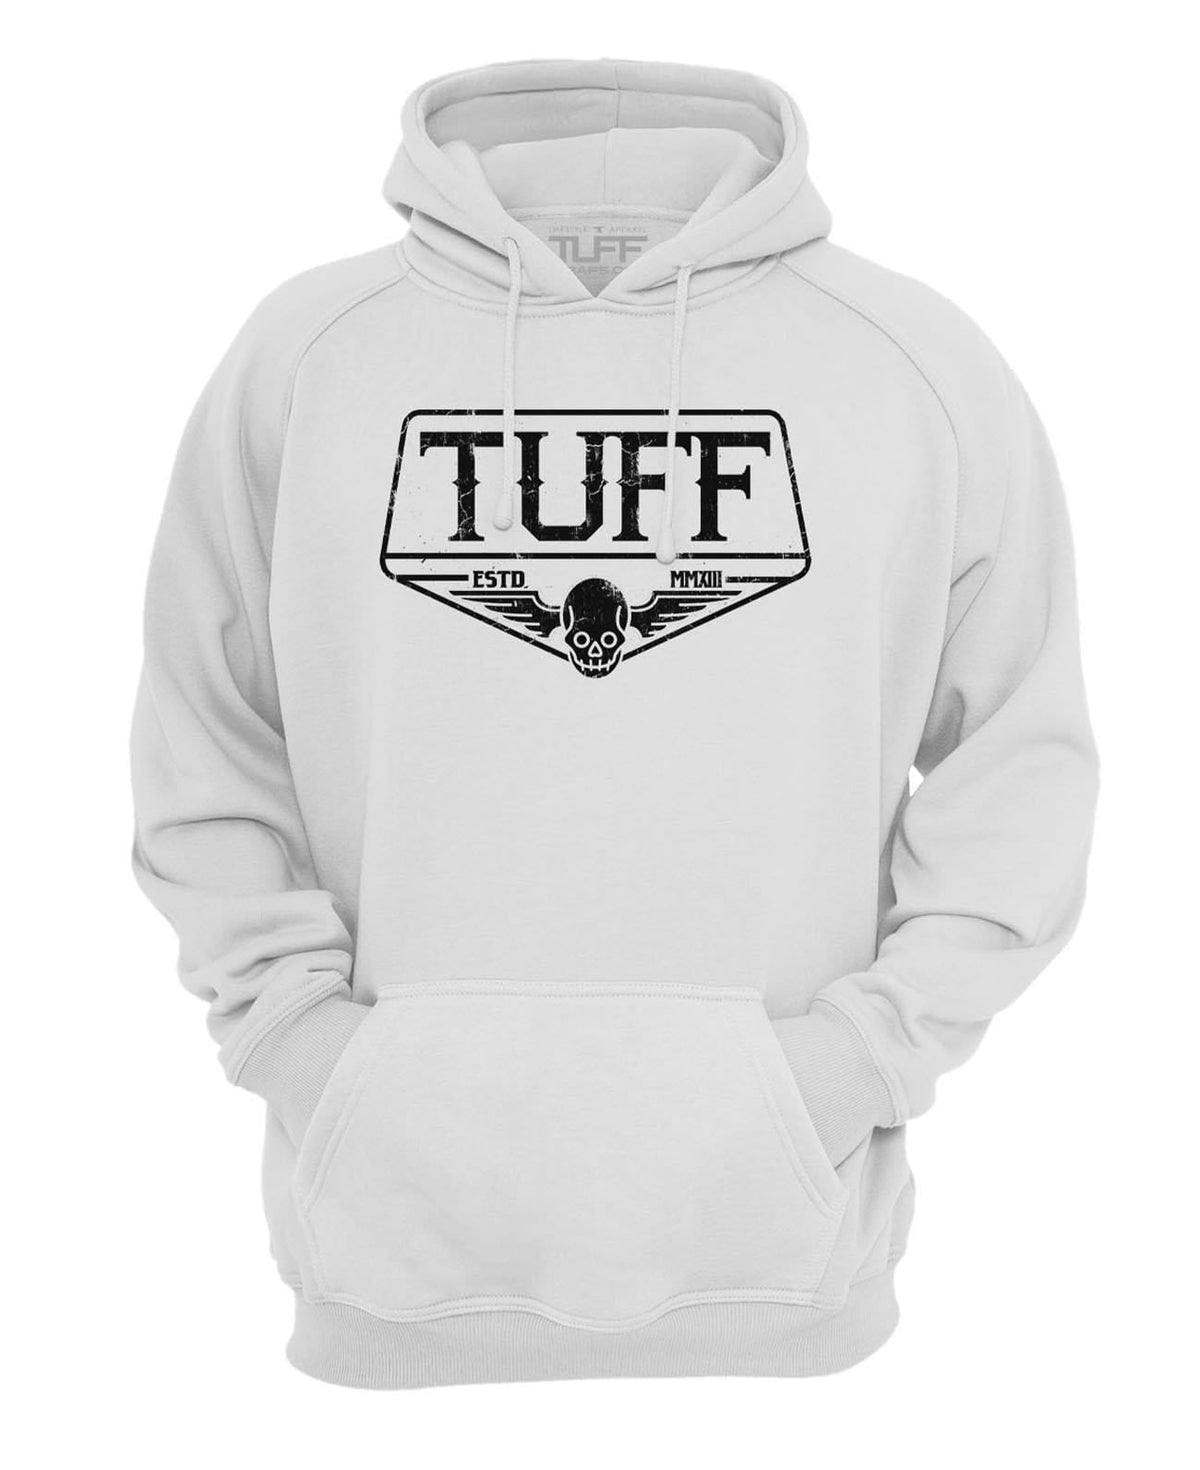 TUFF Skull Wings Hooded Sweatshirt XS / White TuffWraps.com